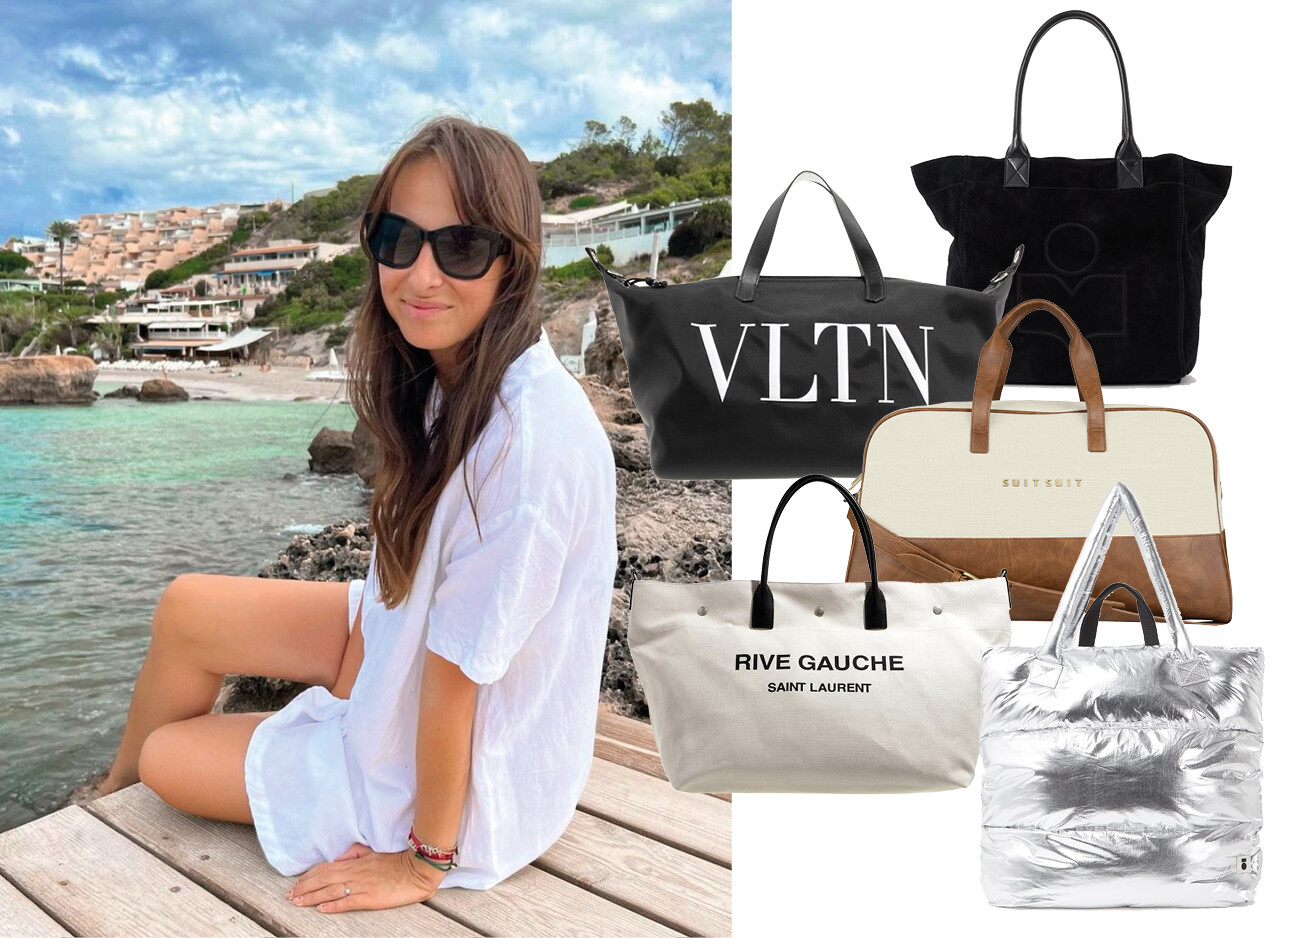 Lilian met designer shopping bags